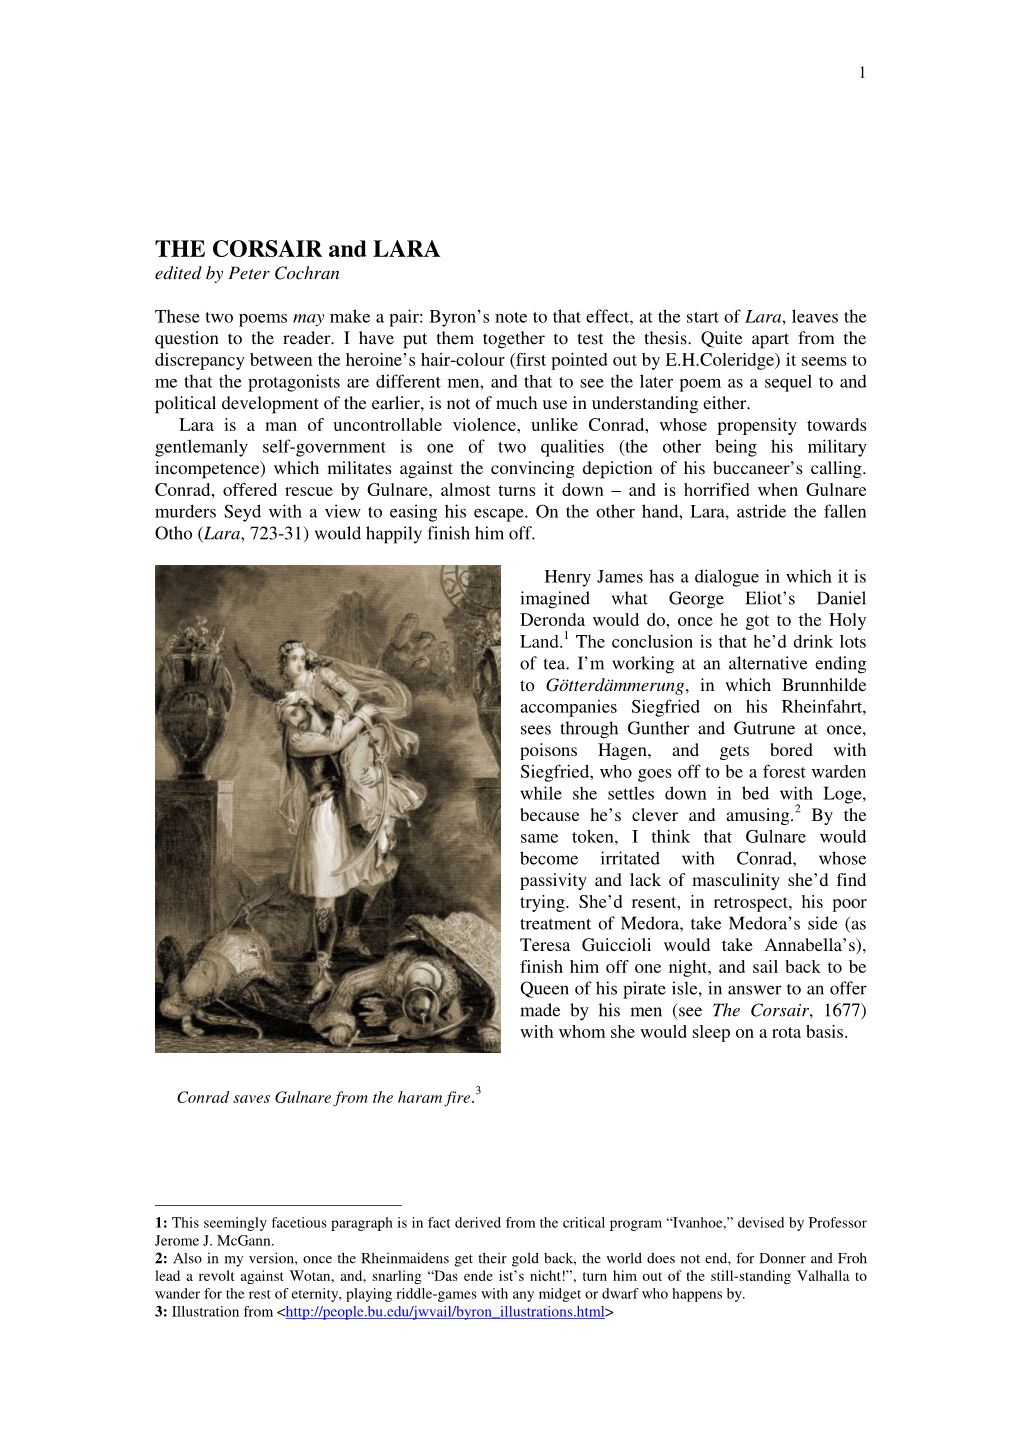 THE CORSAIR and LARA Edited by Peter Cochran